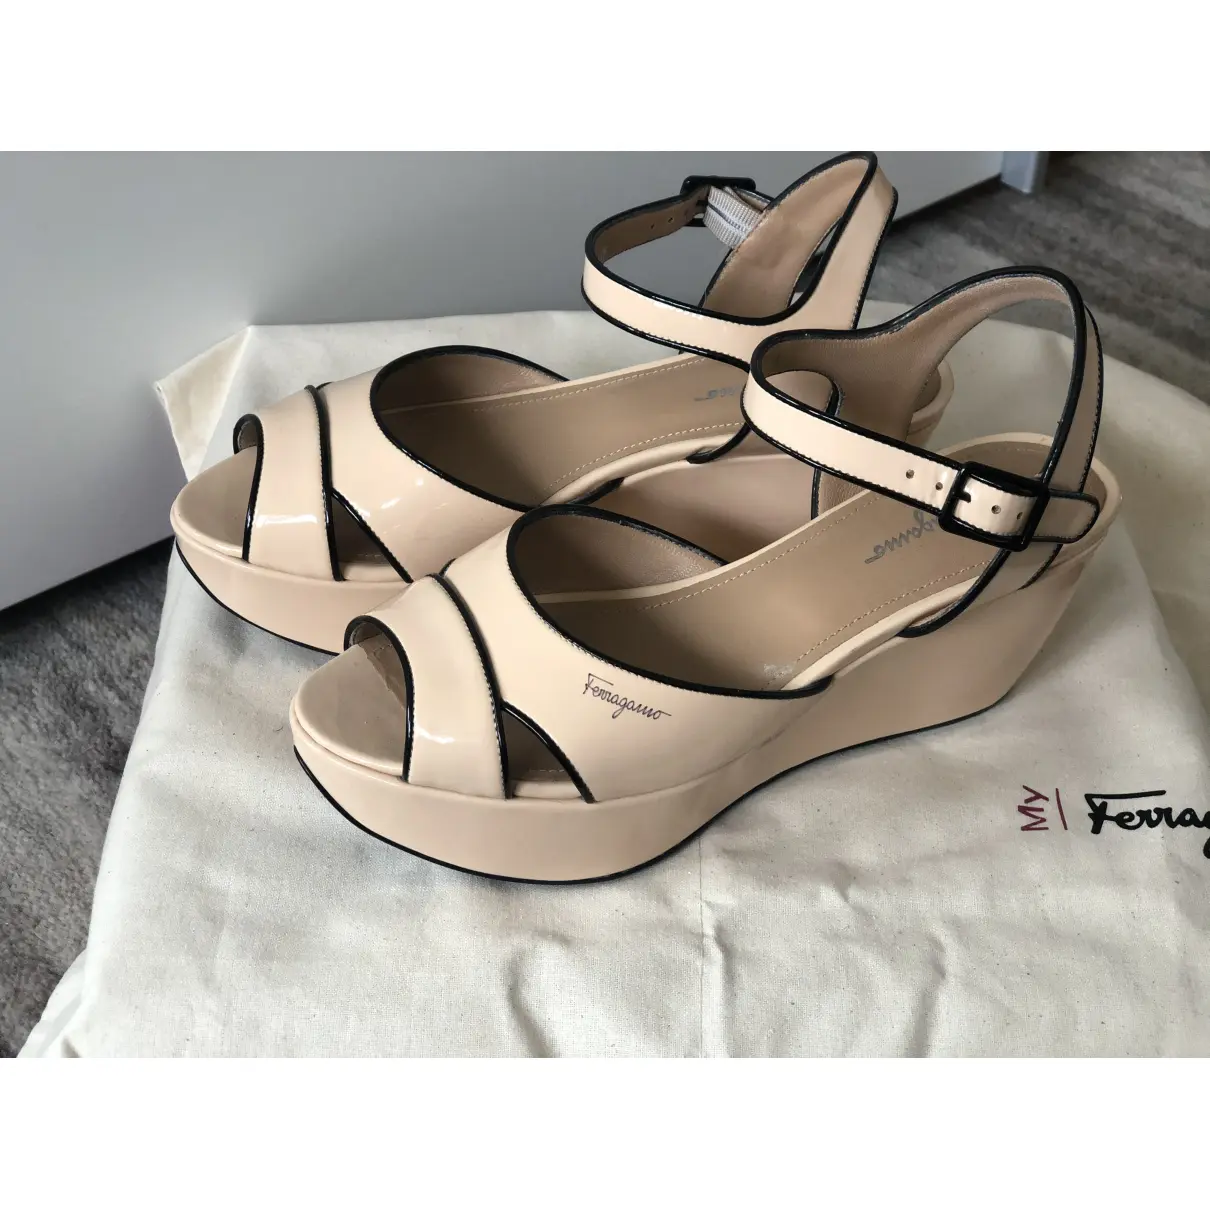 Buy Salvatore Ferragamo Patent leather sandals online